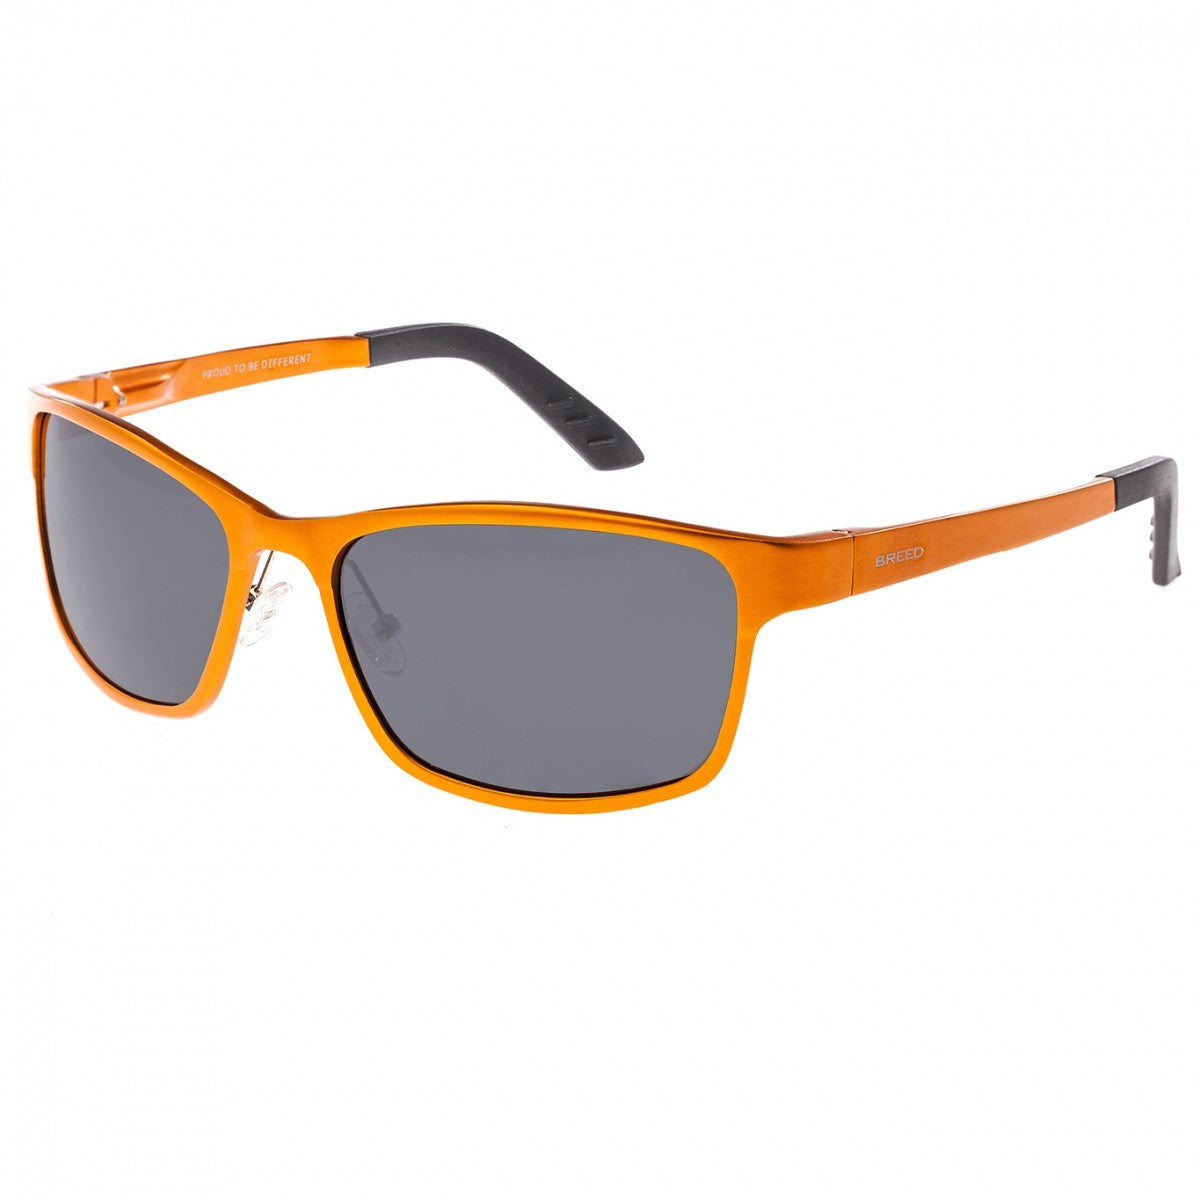 Breed Hydra Aluminium Polarized Sunglasses - Orange/Black - BSG022OG